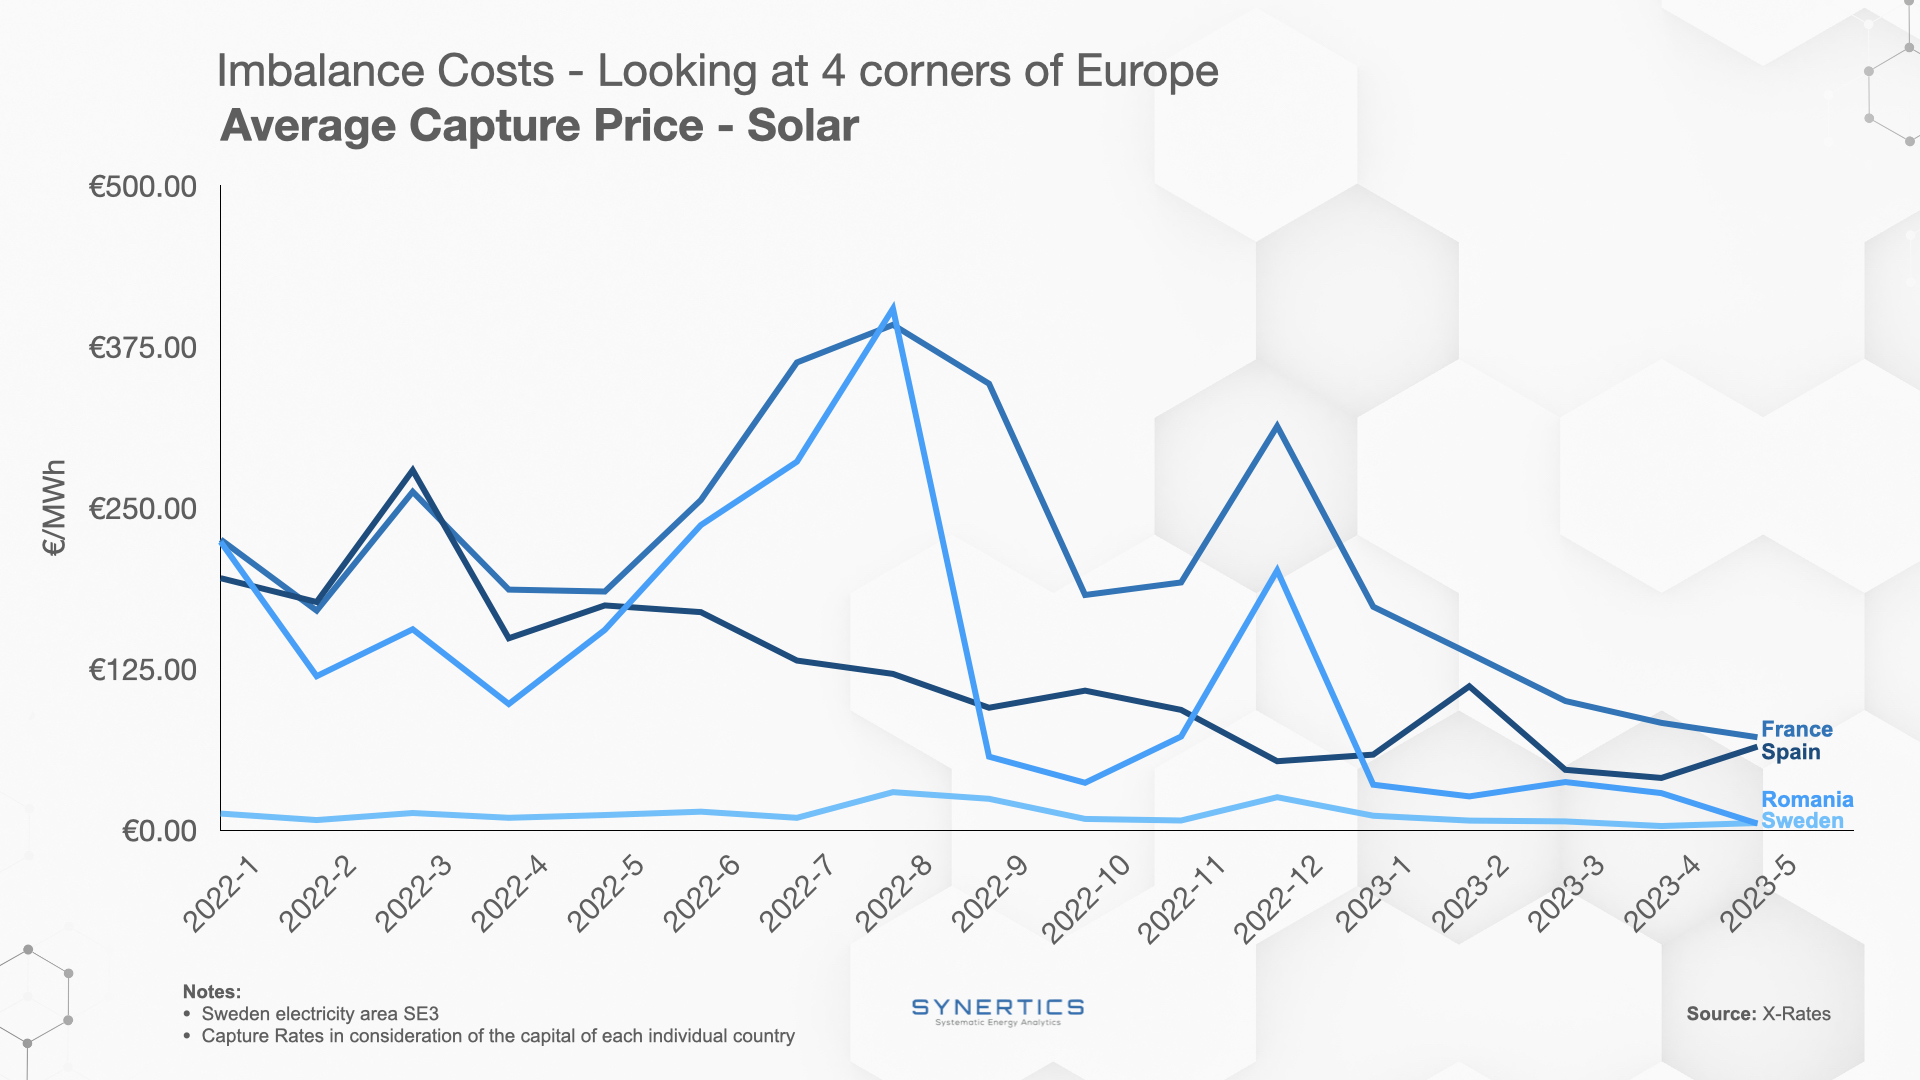 Imbalance Costs Europe - Average Capture Price - Solar